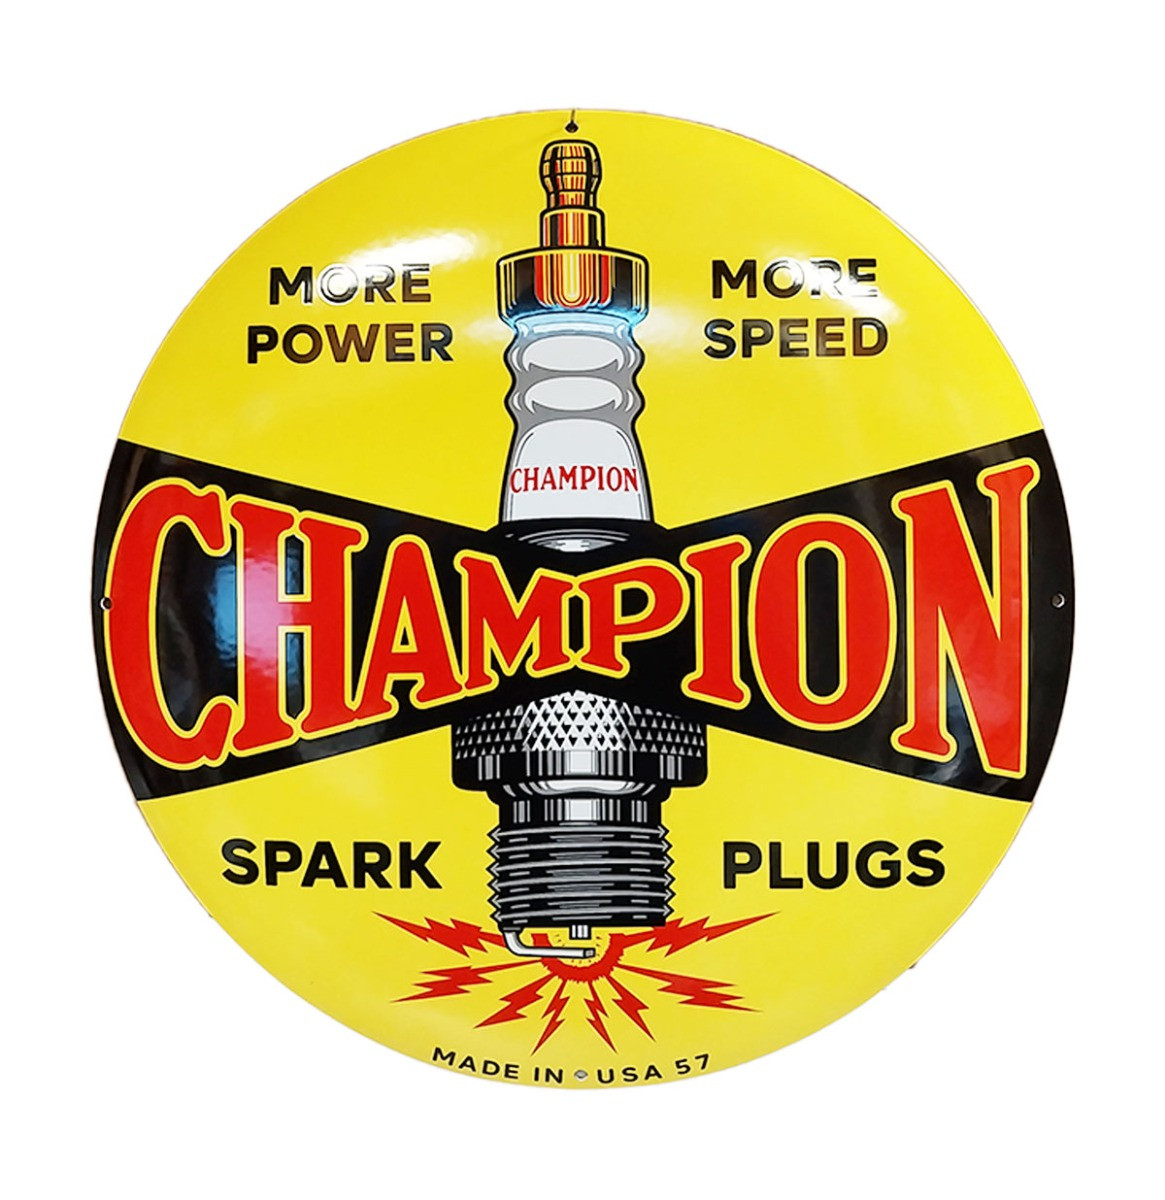 Champion Spark Plugs Emaille Bord - Ø50cm